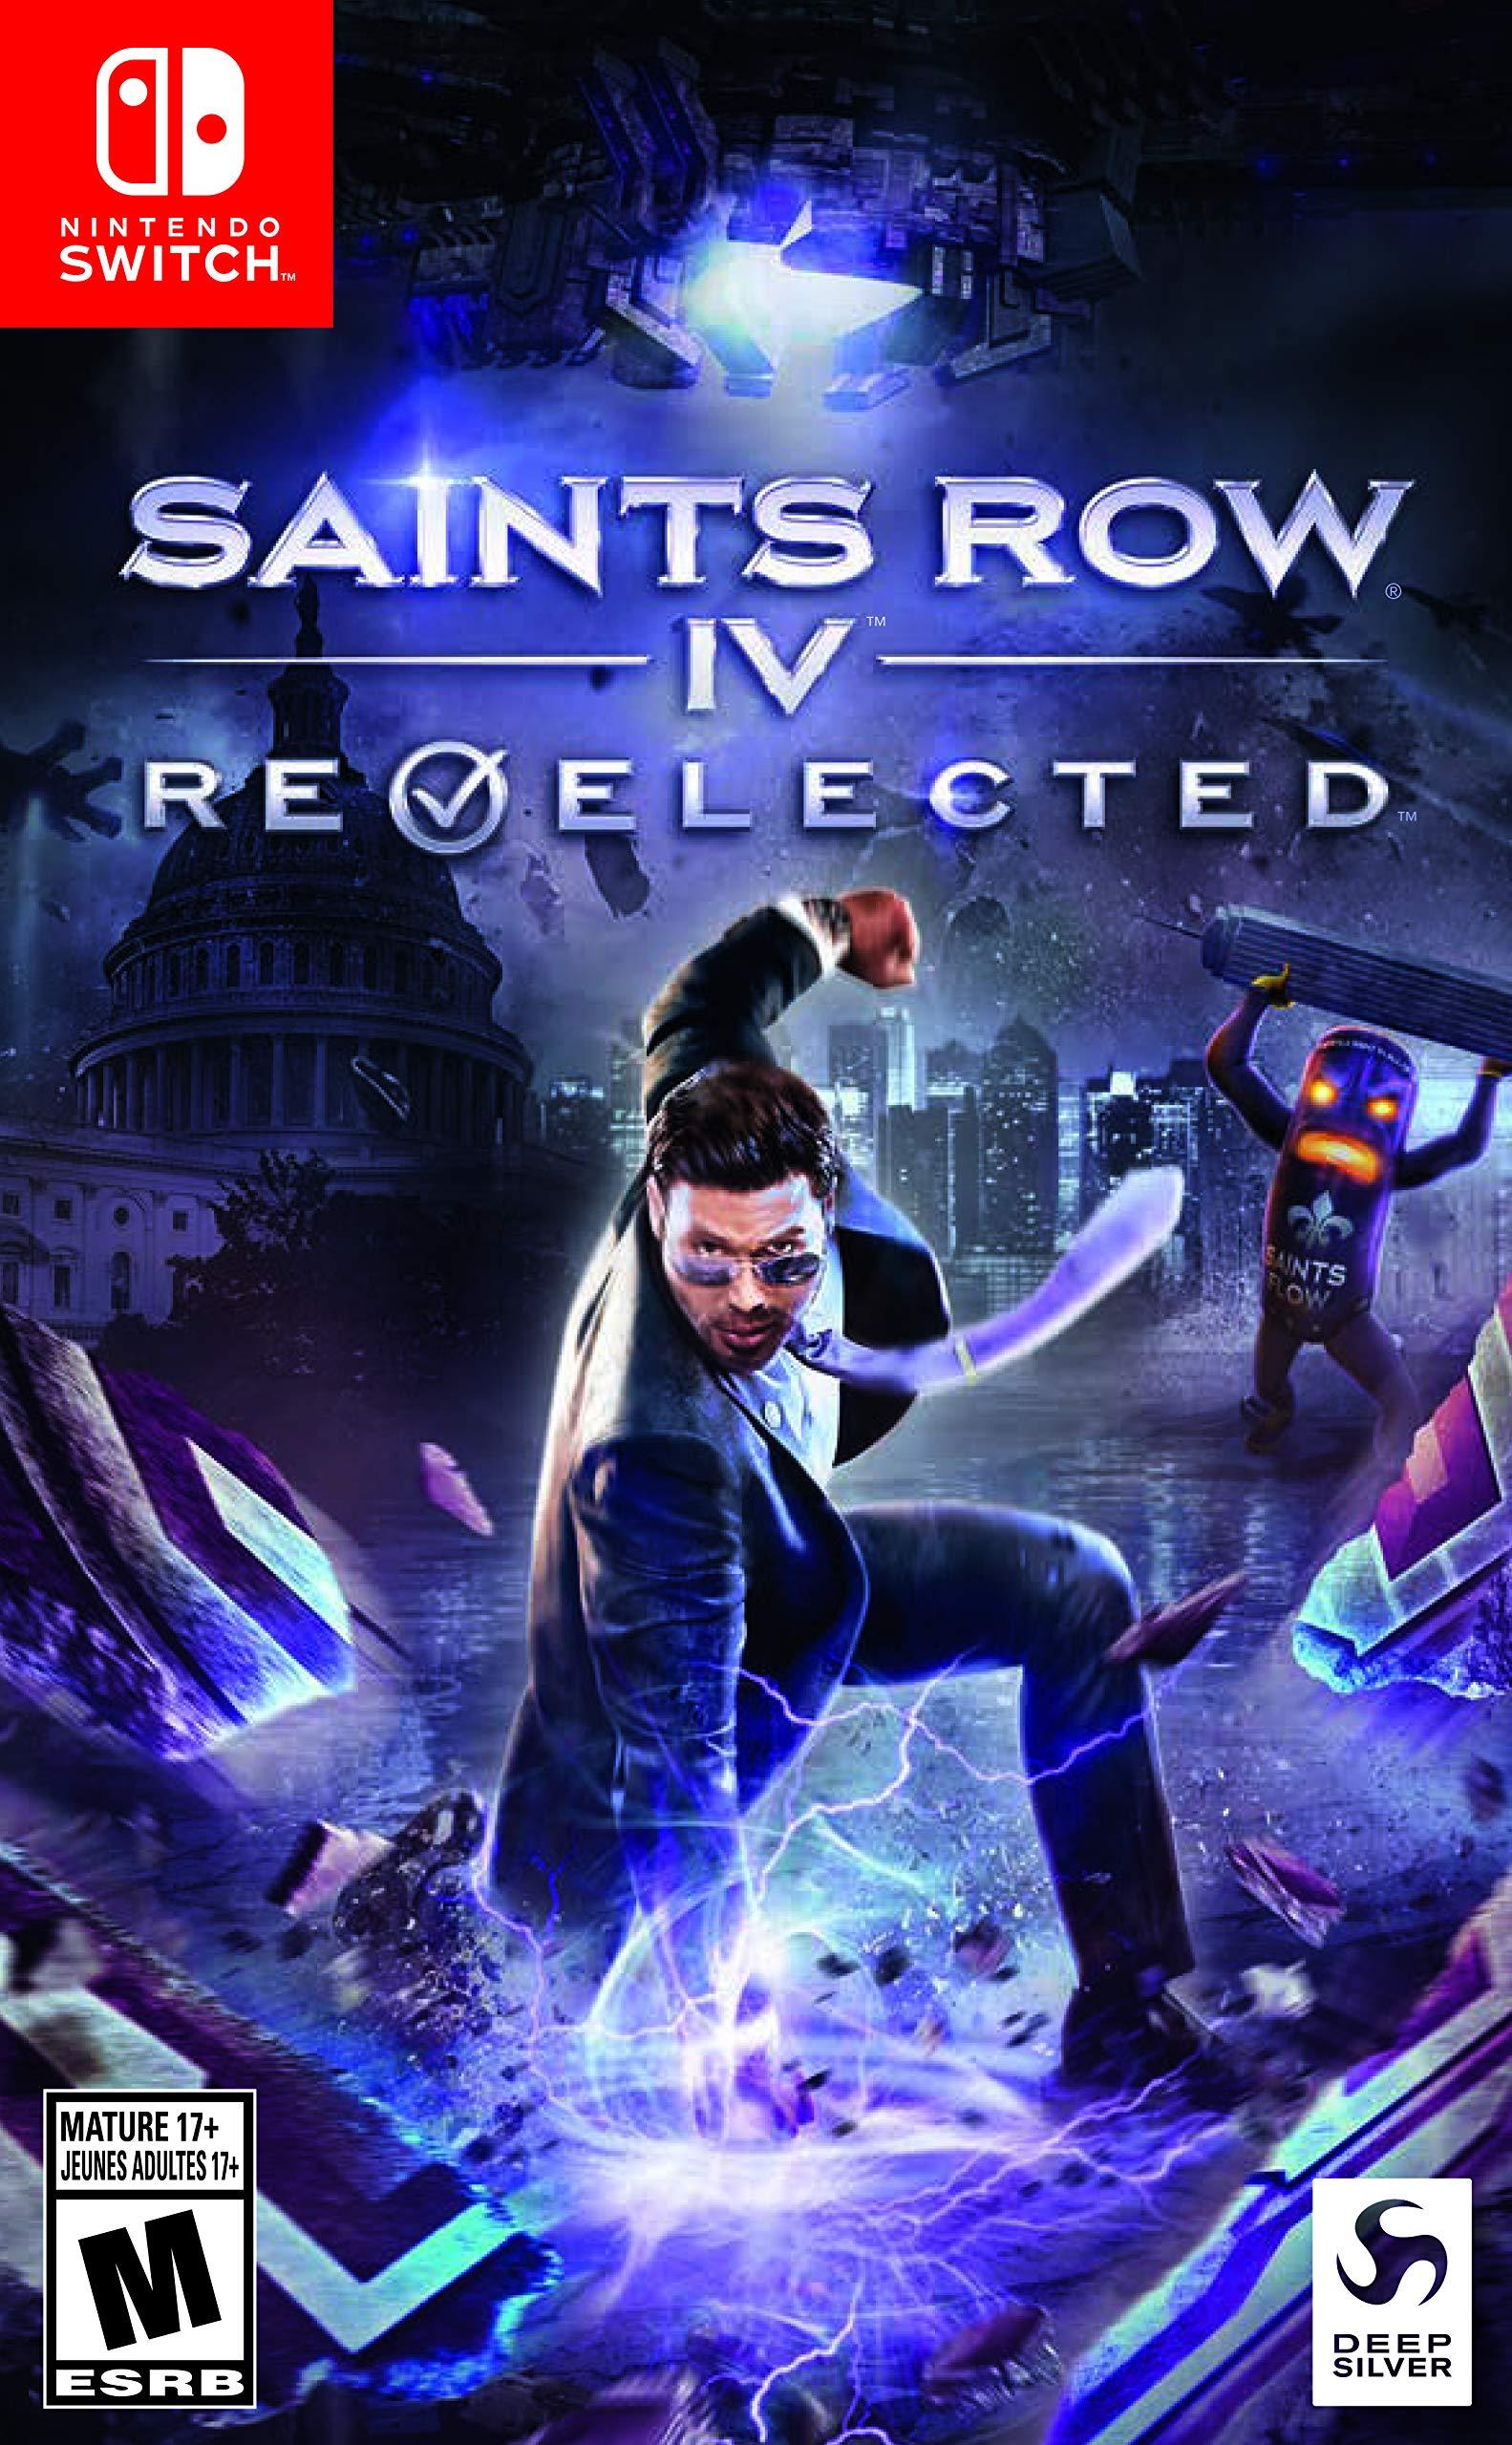 Saints Row IV: Re-Elected & Gat out of Hell - Launch Trailer [DE